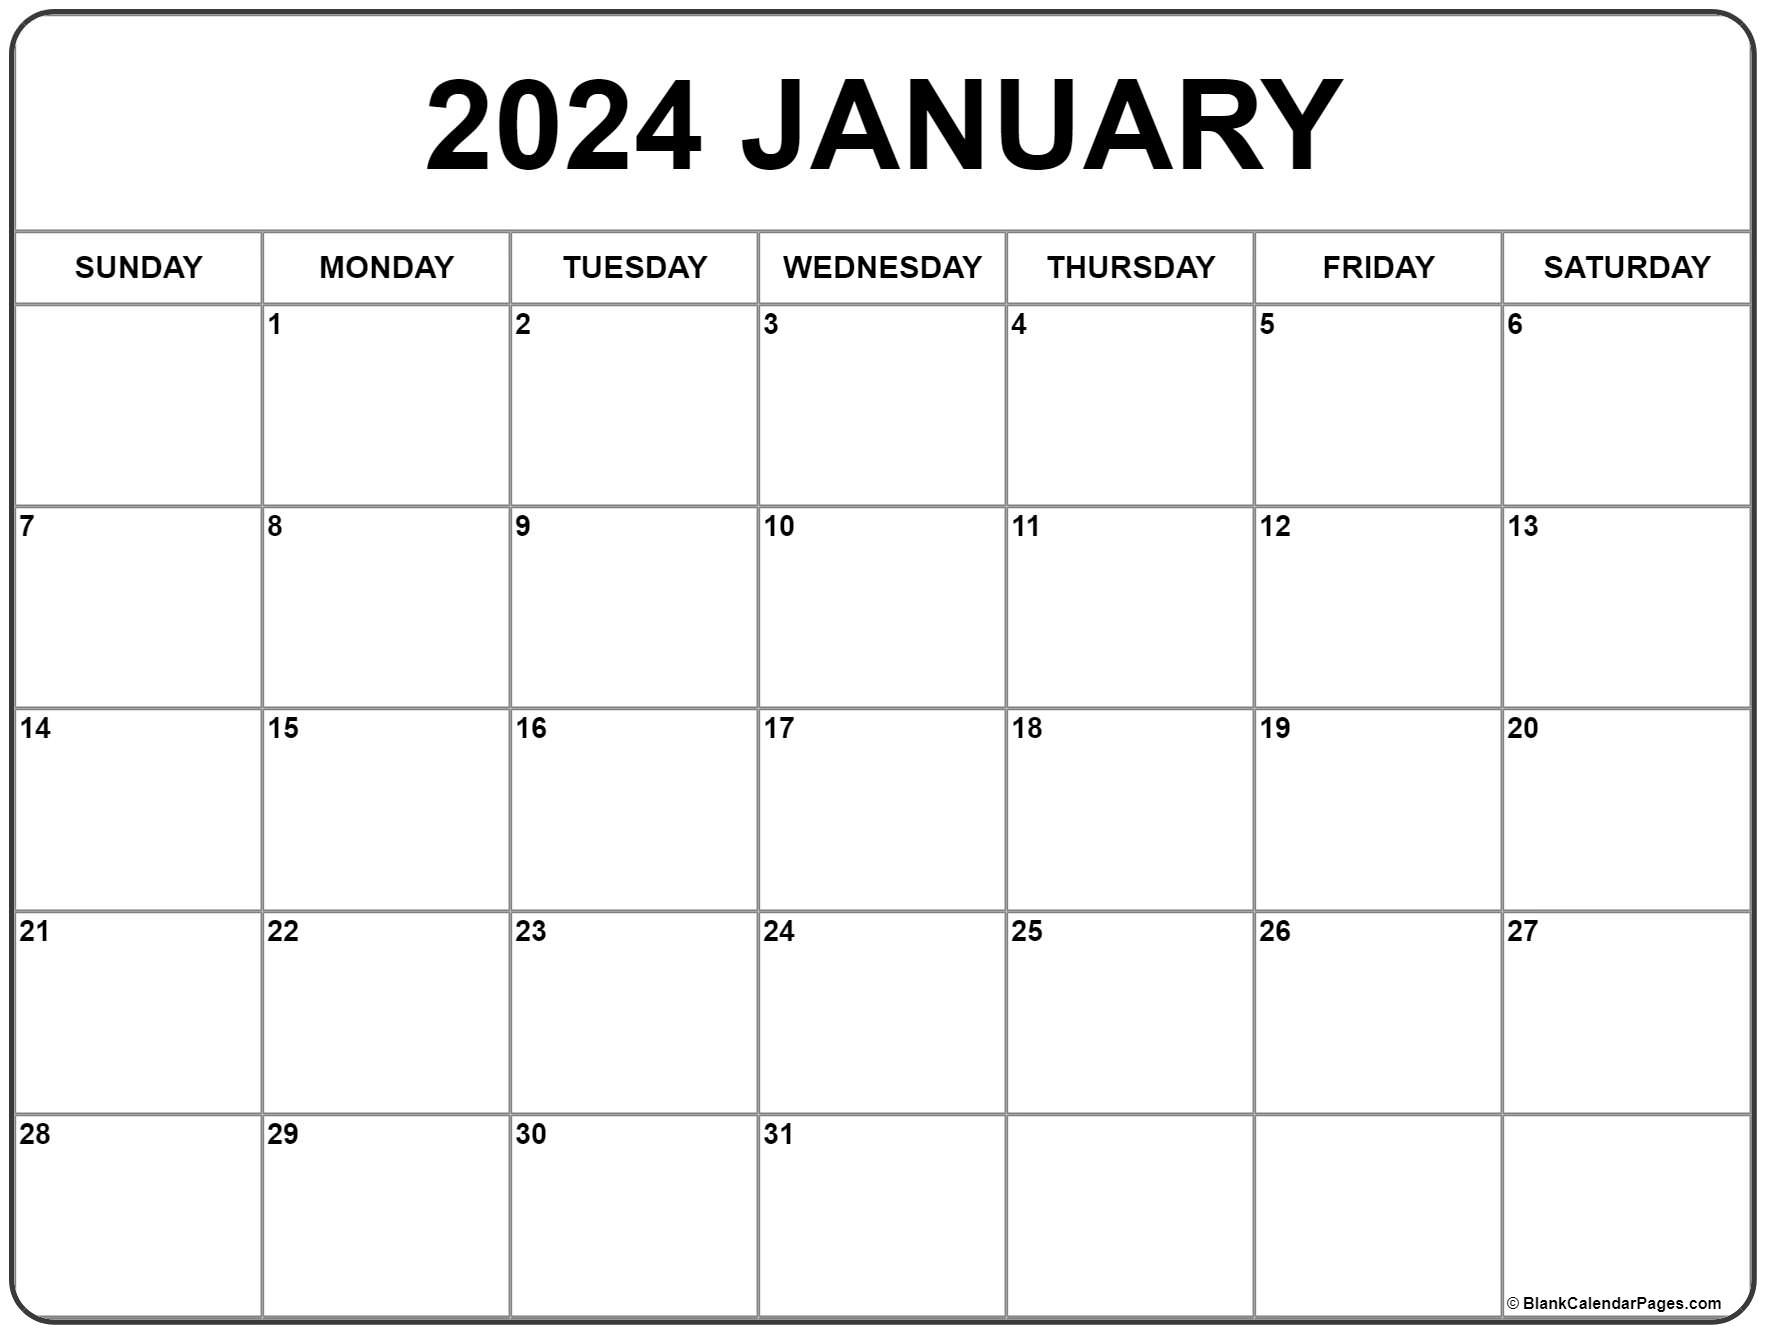 January 2024 Calendar | Free Printable Calendar for Printable 2024 January Calendar